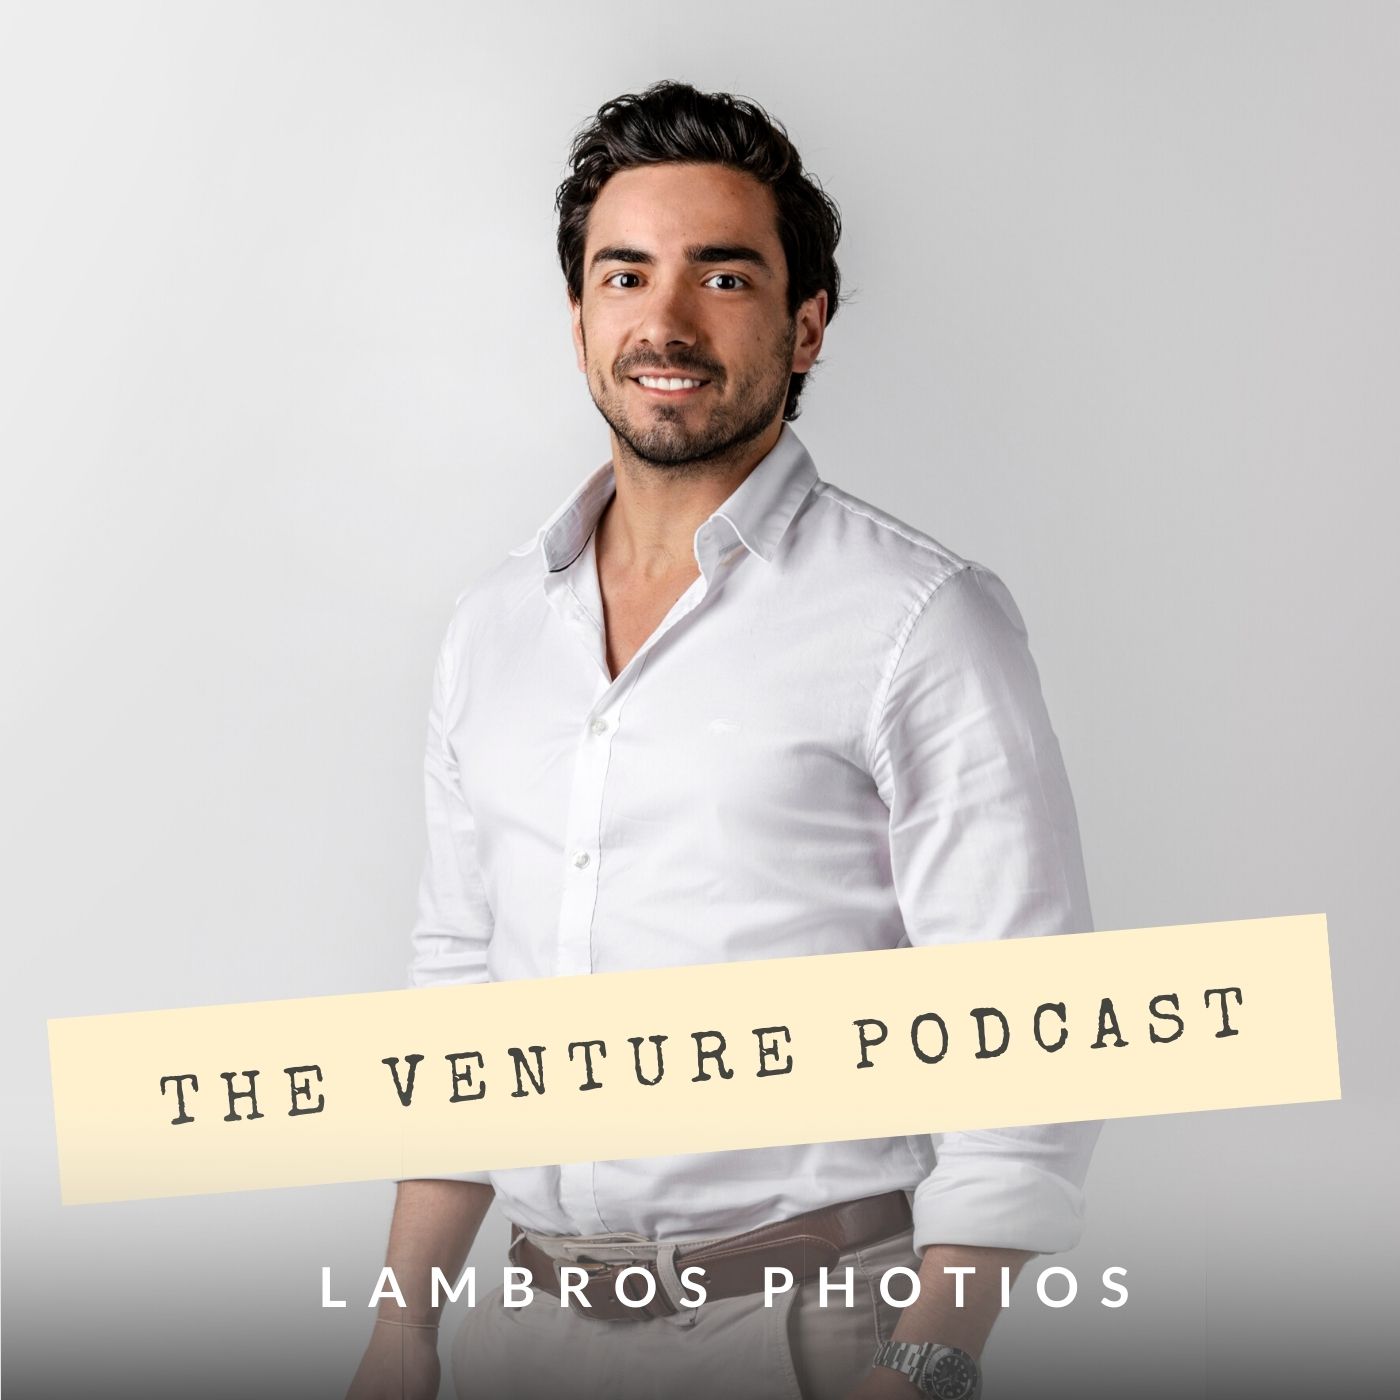 The Venture Podcast